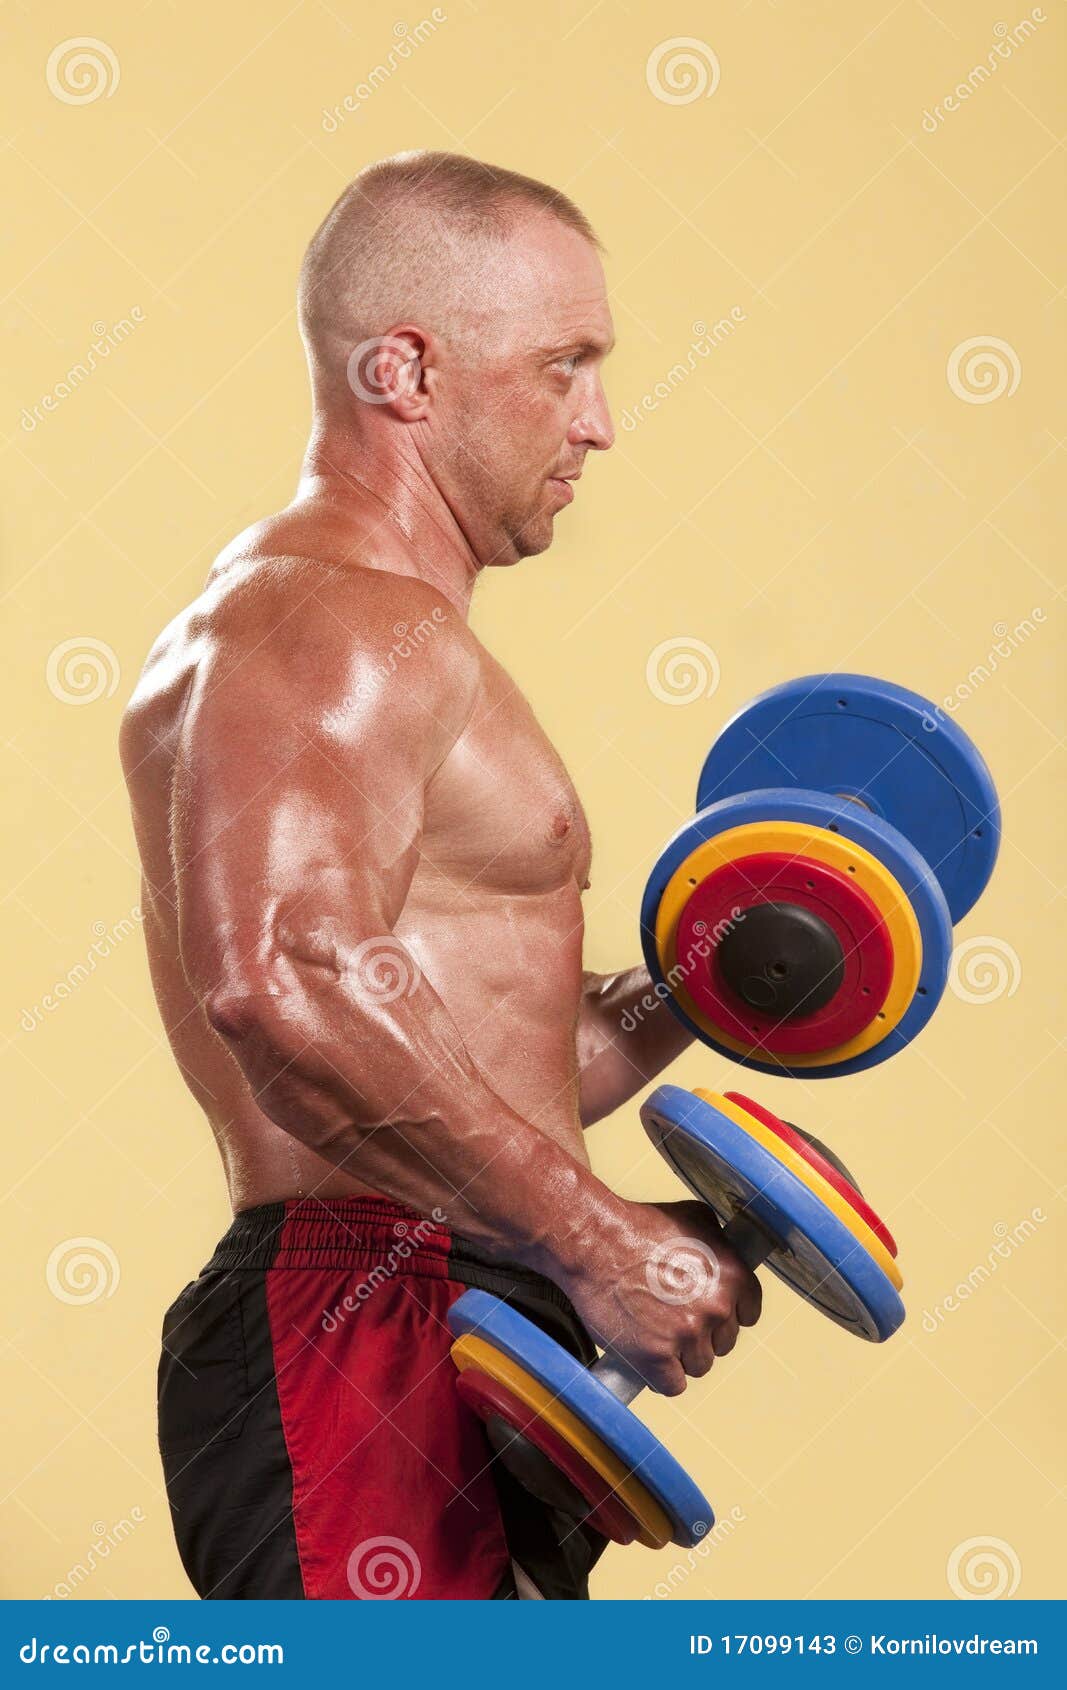 Bodybuilder Training with Dumbbells Stock Image - Image of lifting